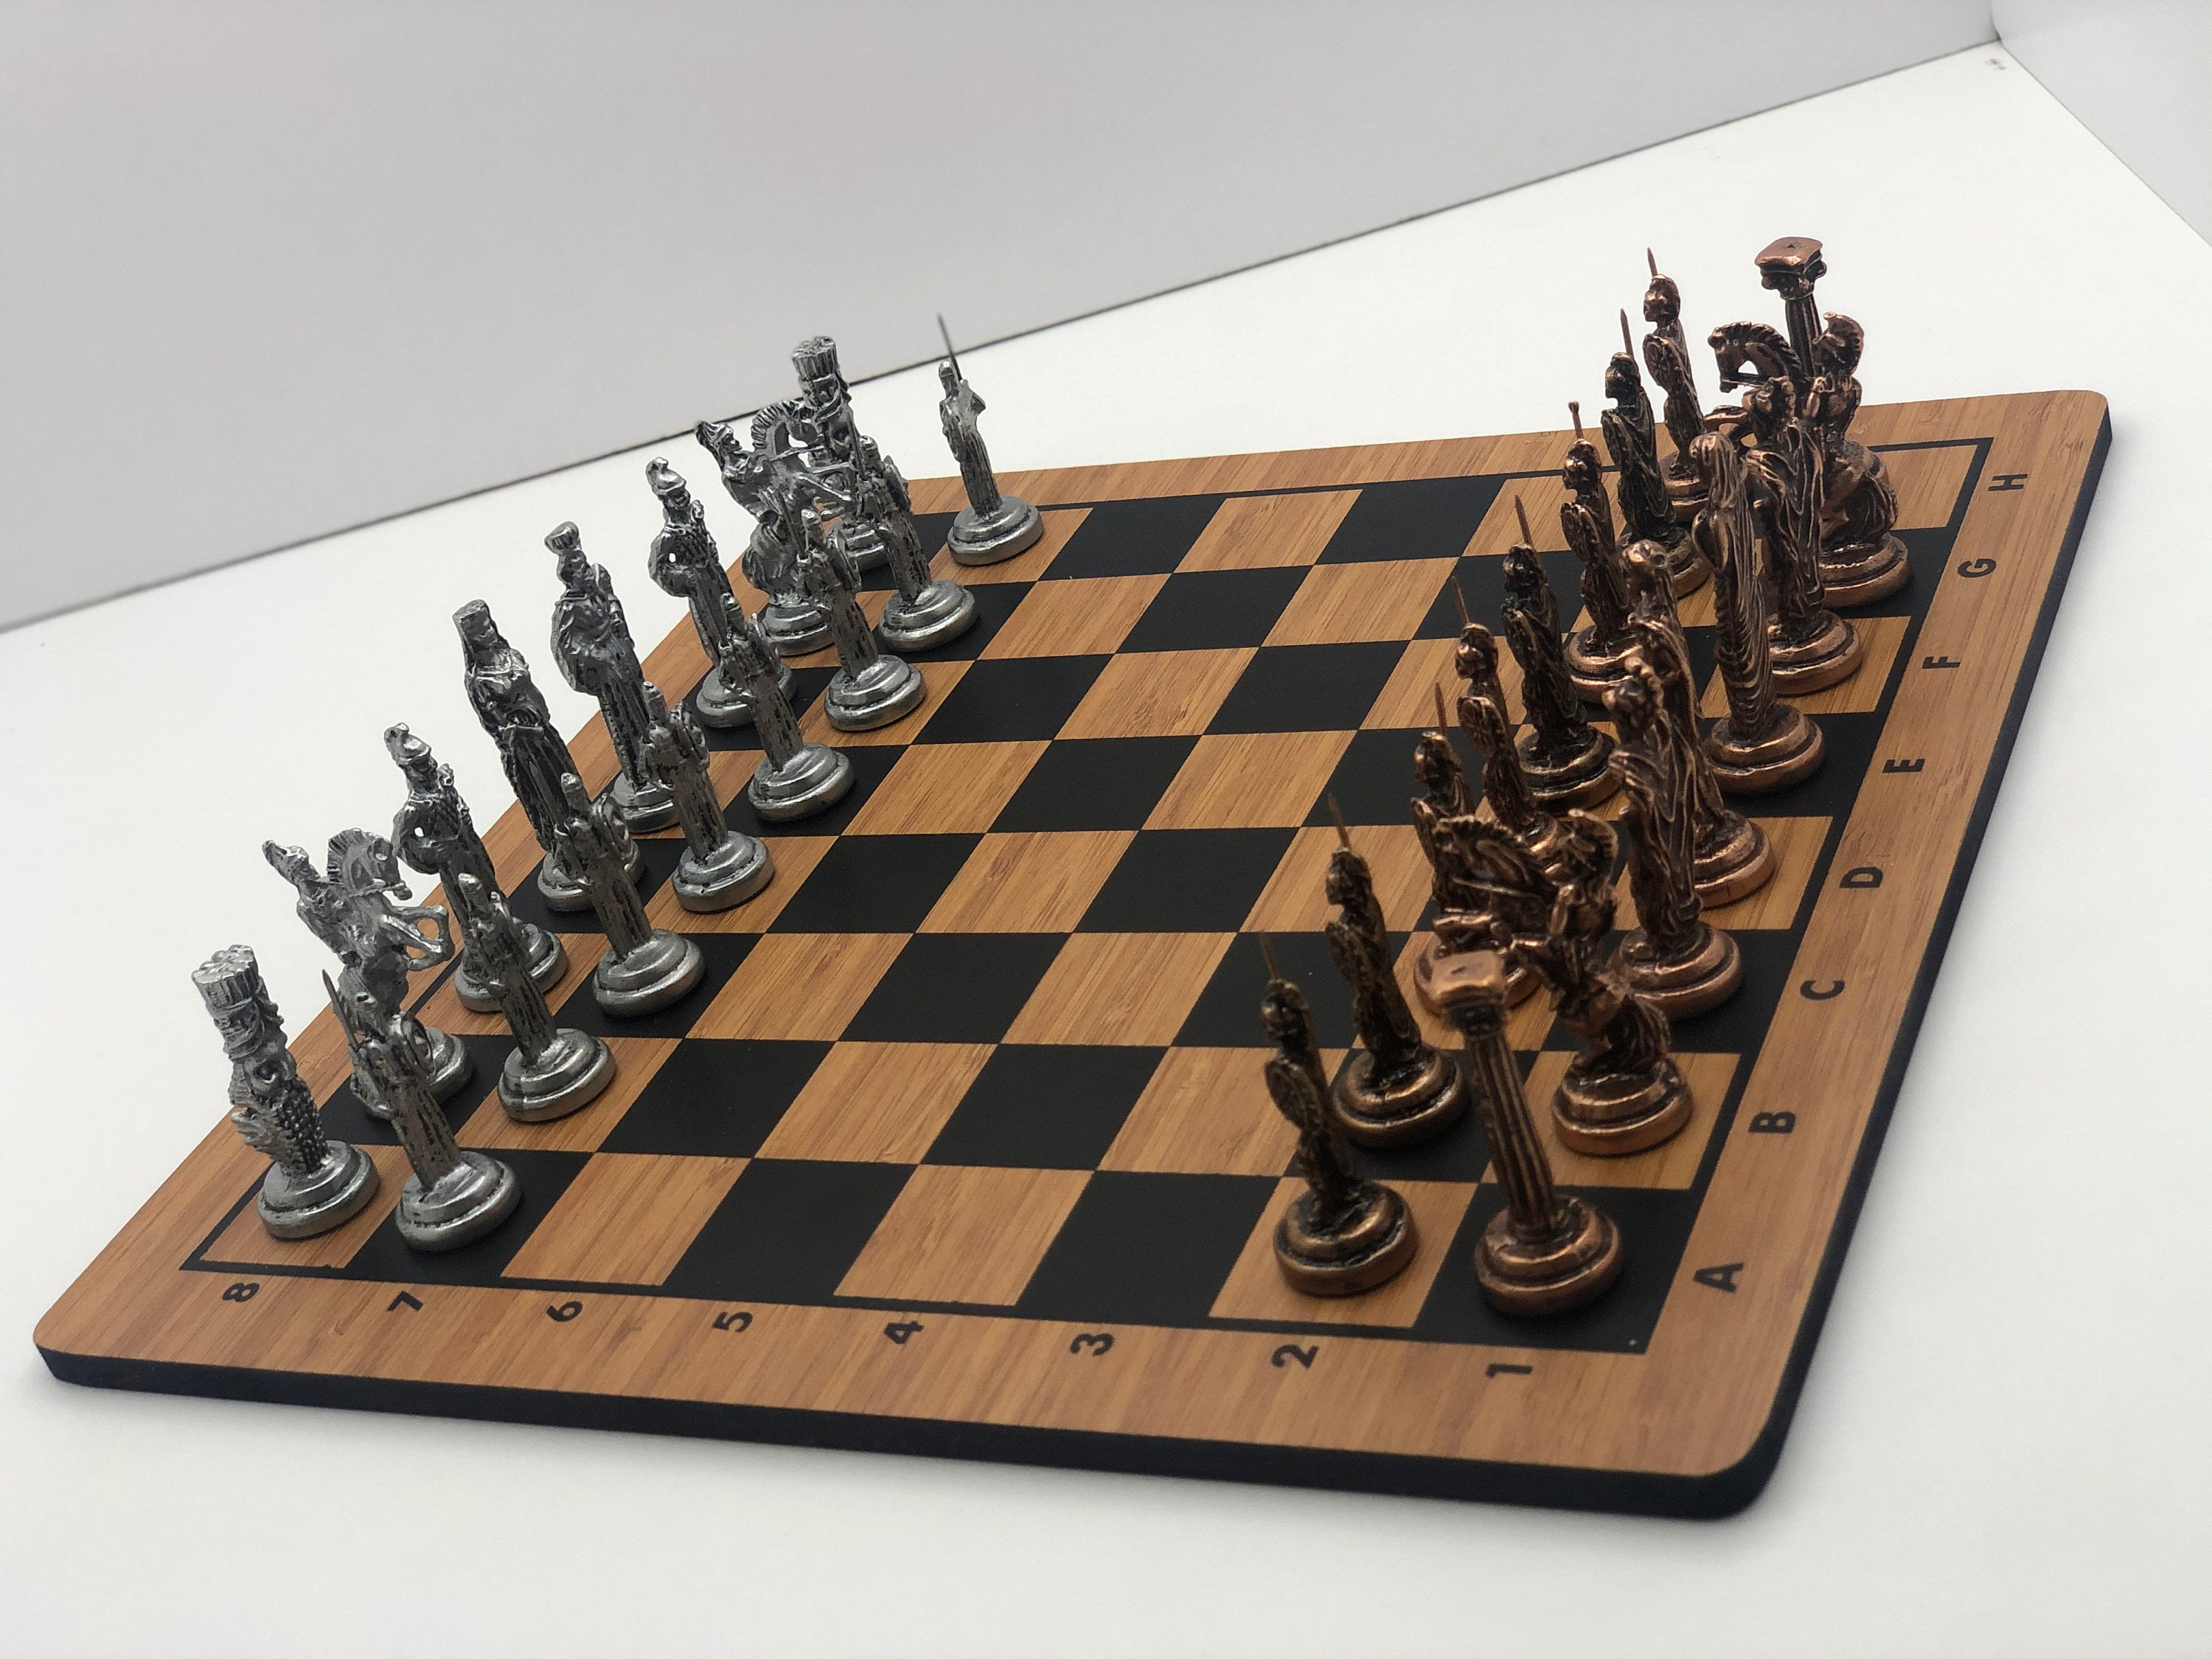 Buy Cast Chess Pawn Puzzle UK - Chess Piece Puzzle - Crux Puzzles